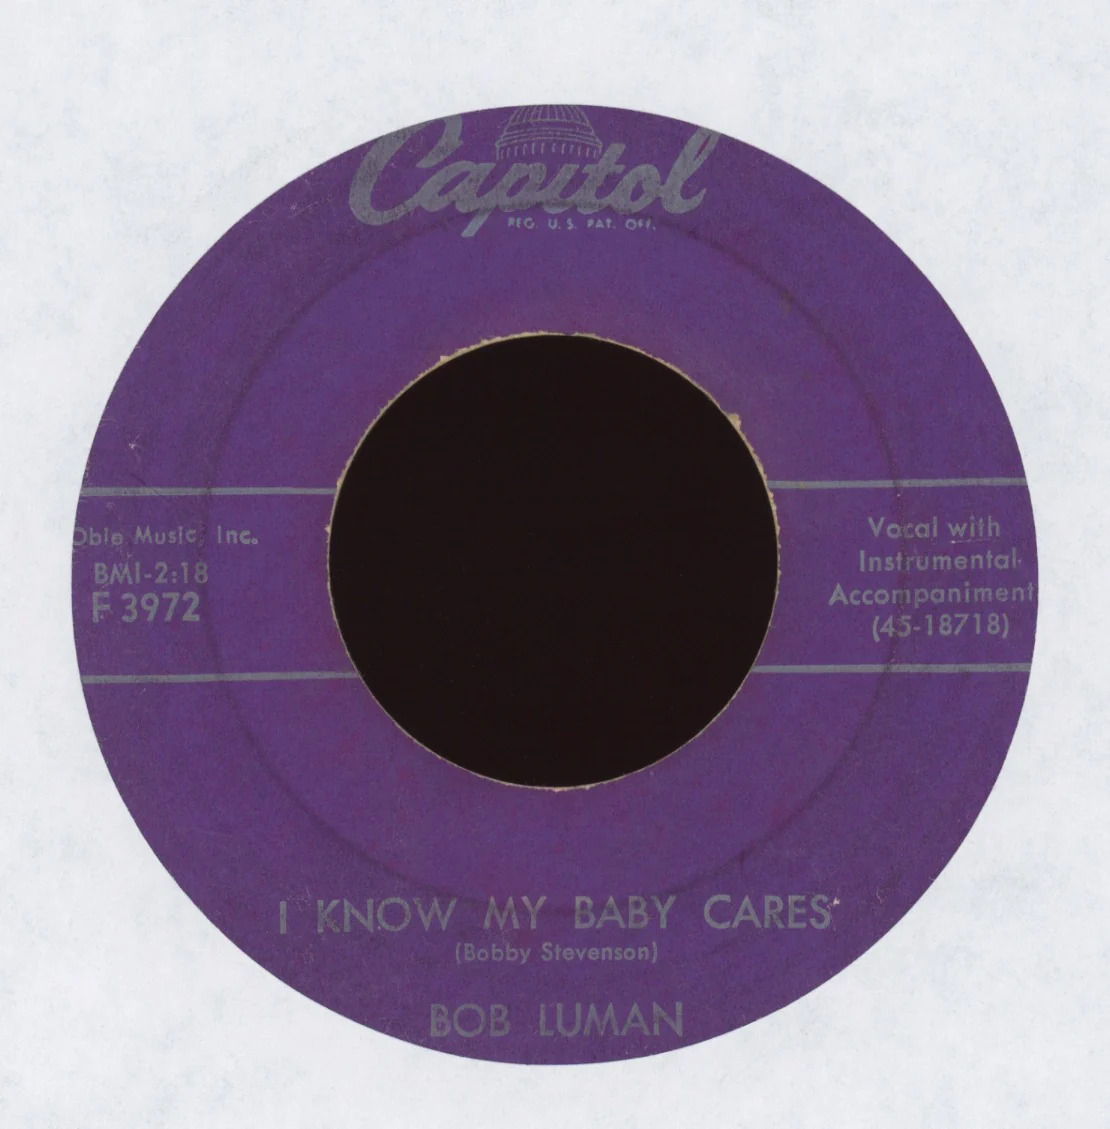 Rockabilly 45 - Bob Luman - I Know My Baby Cares on Capitol